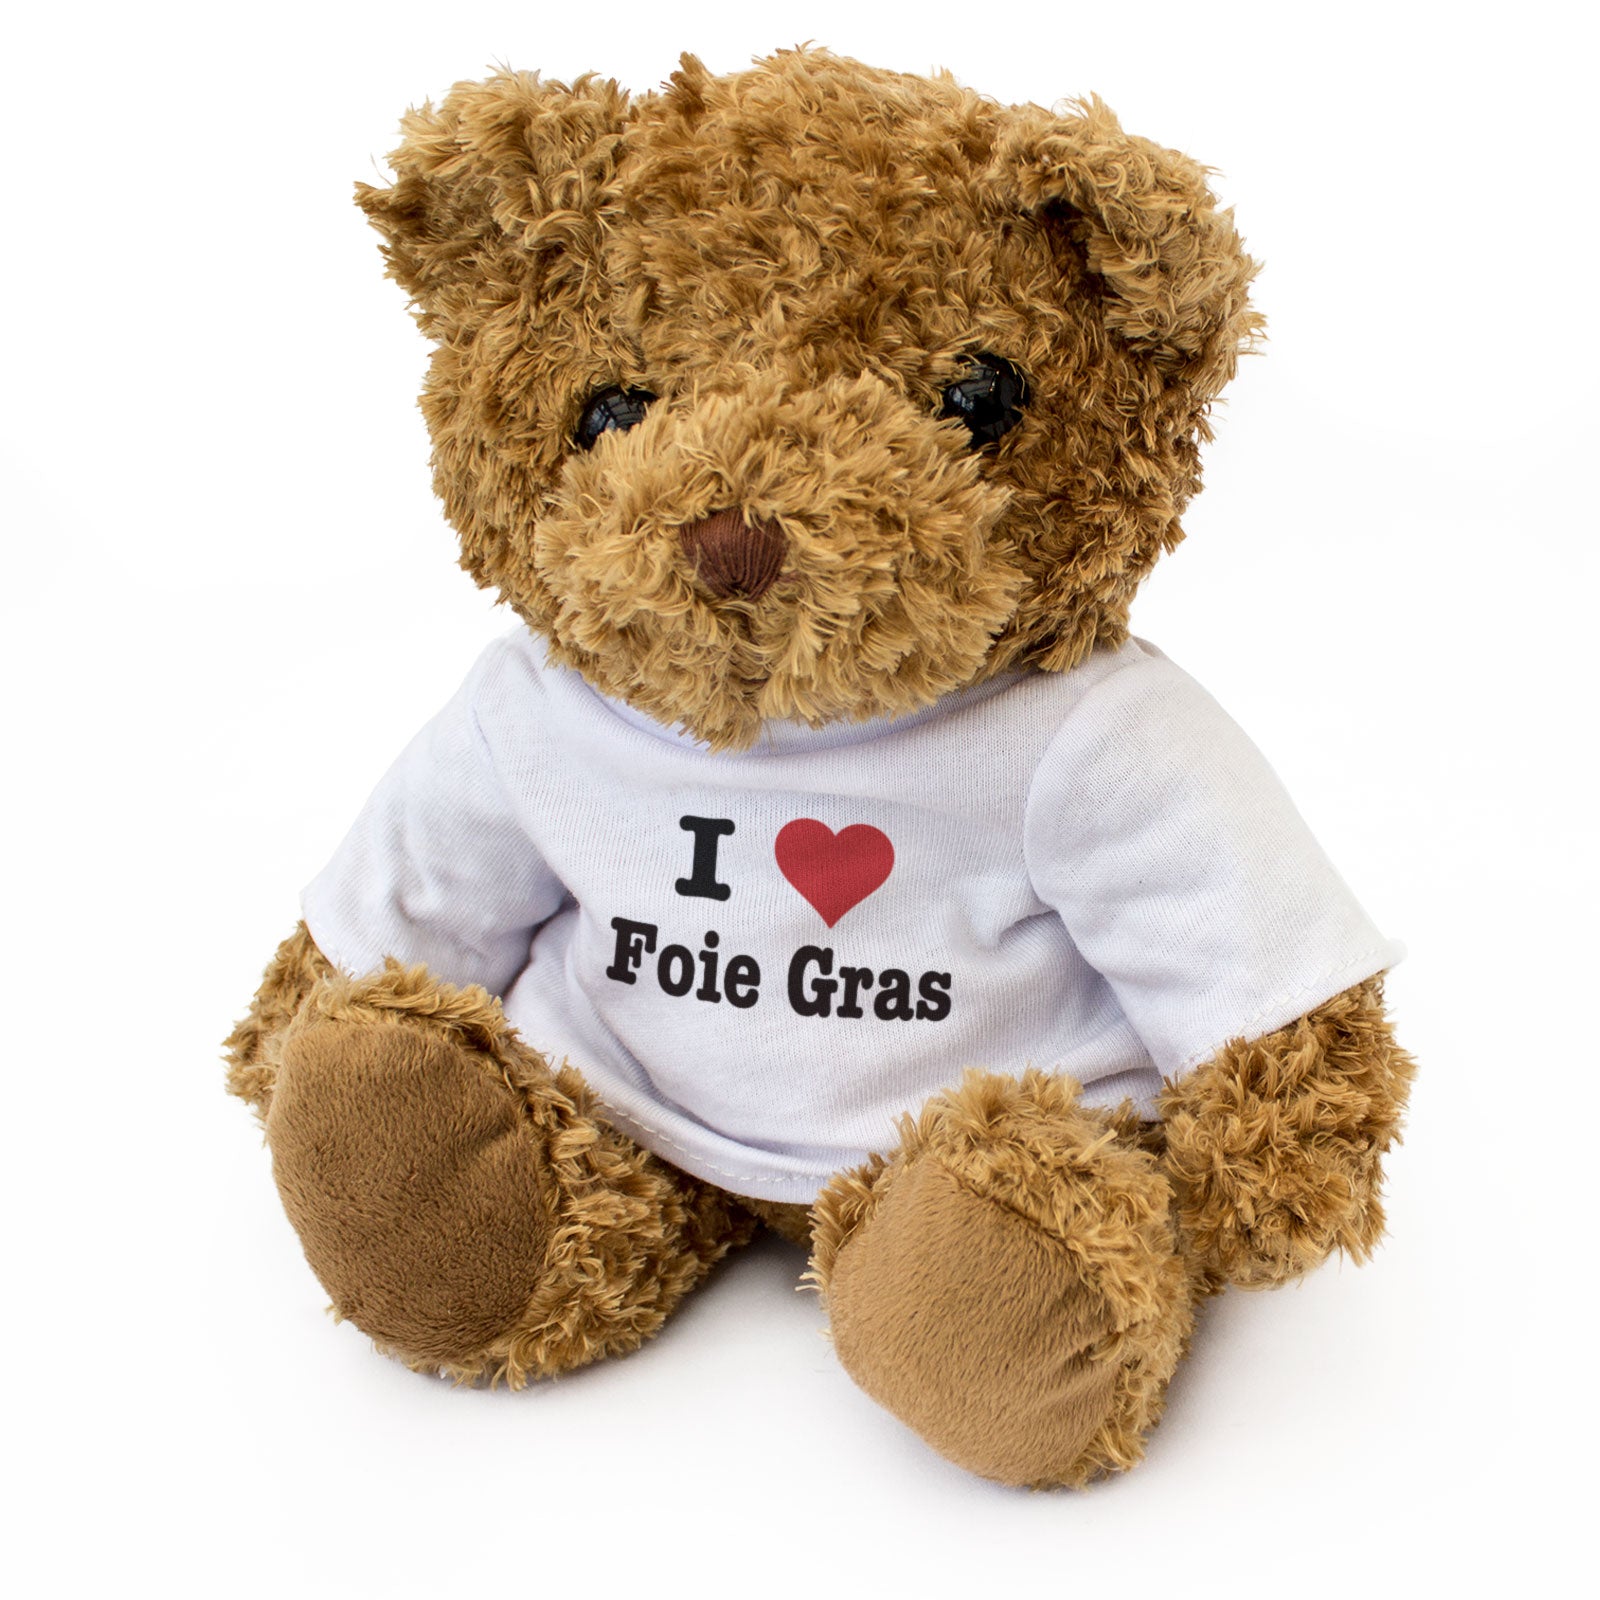 I Love Foie Gras - Teddy Bear